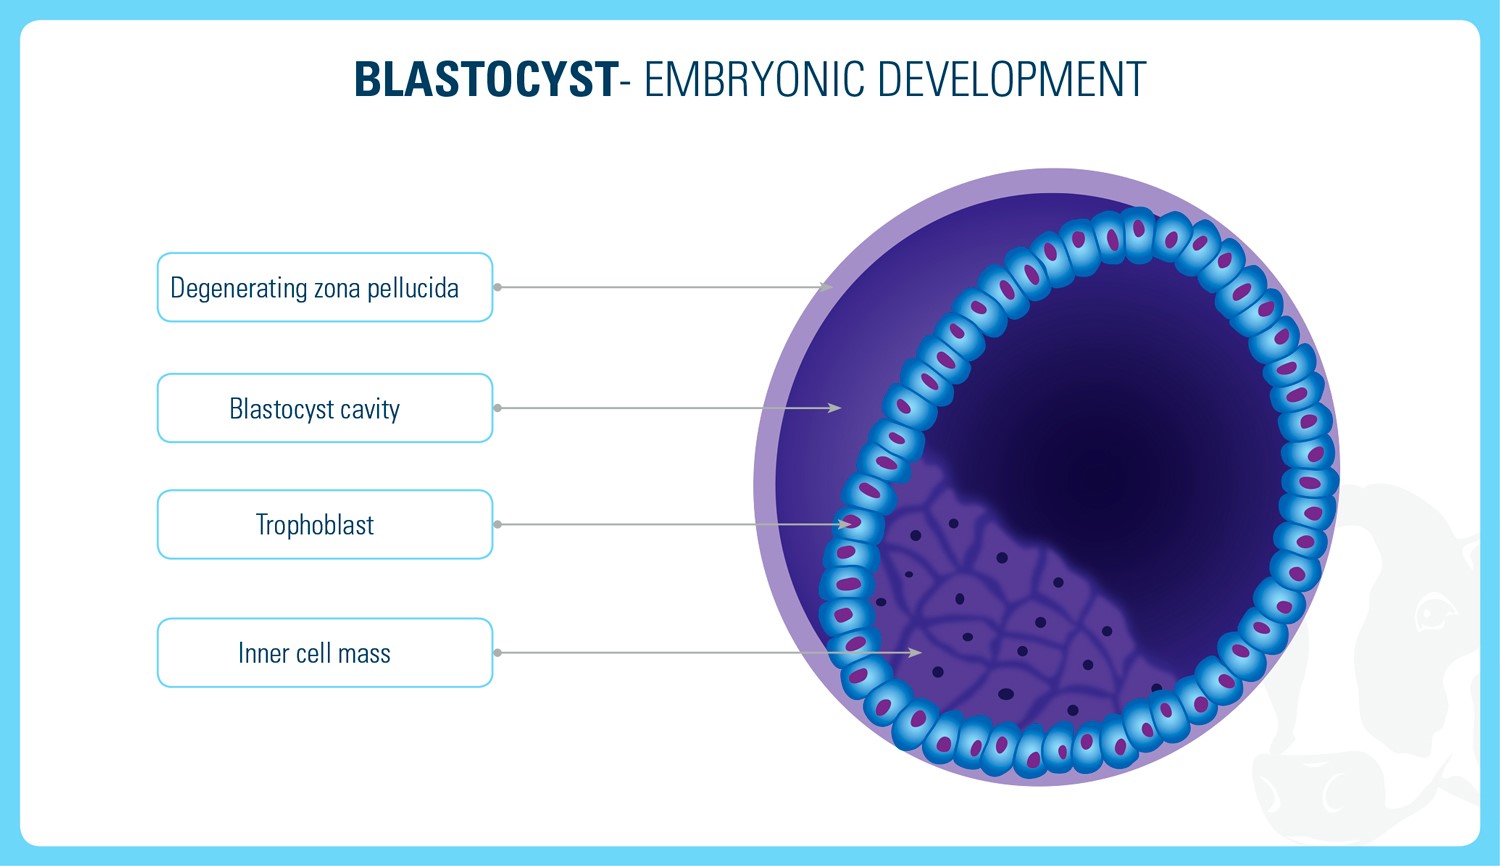 blastocyst - embryonic development